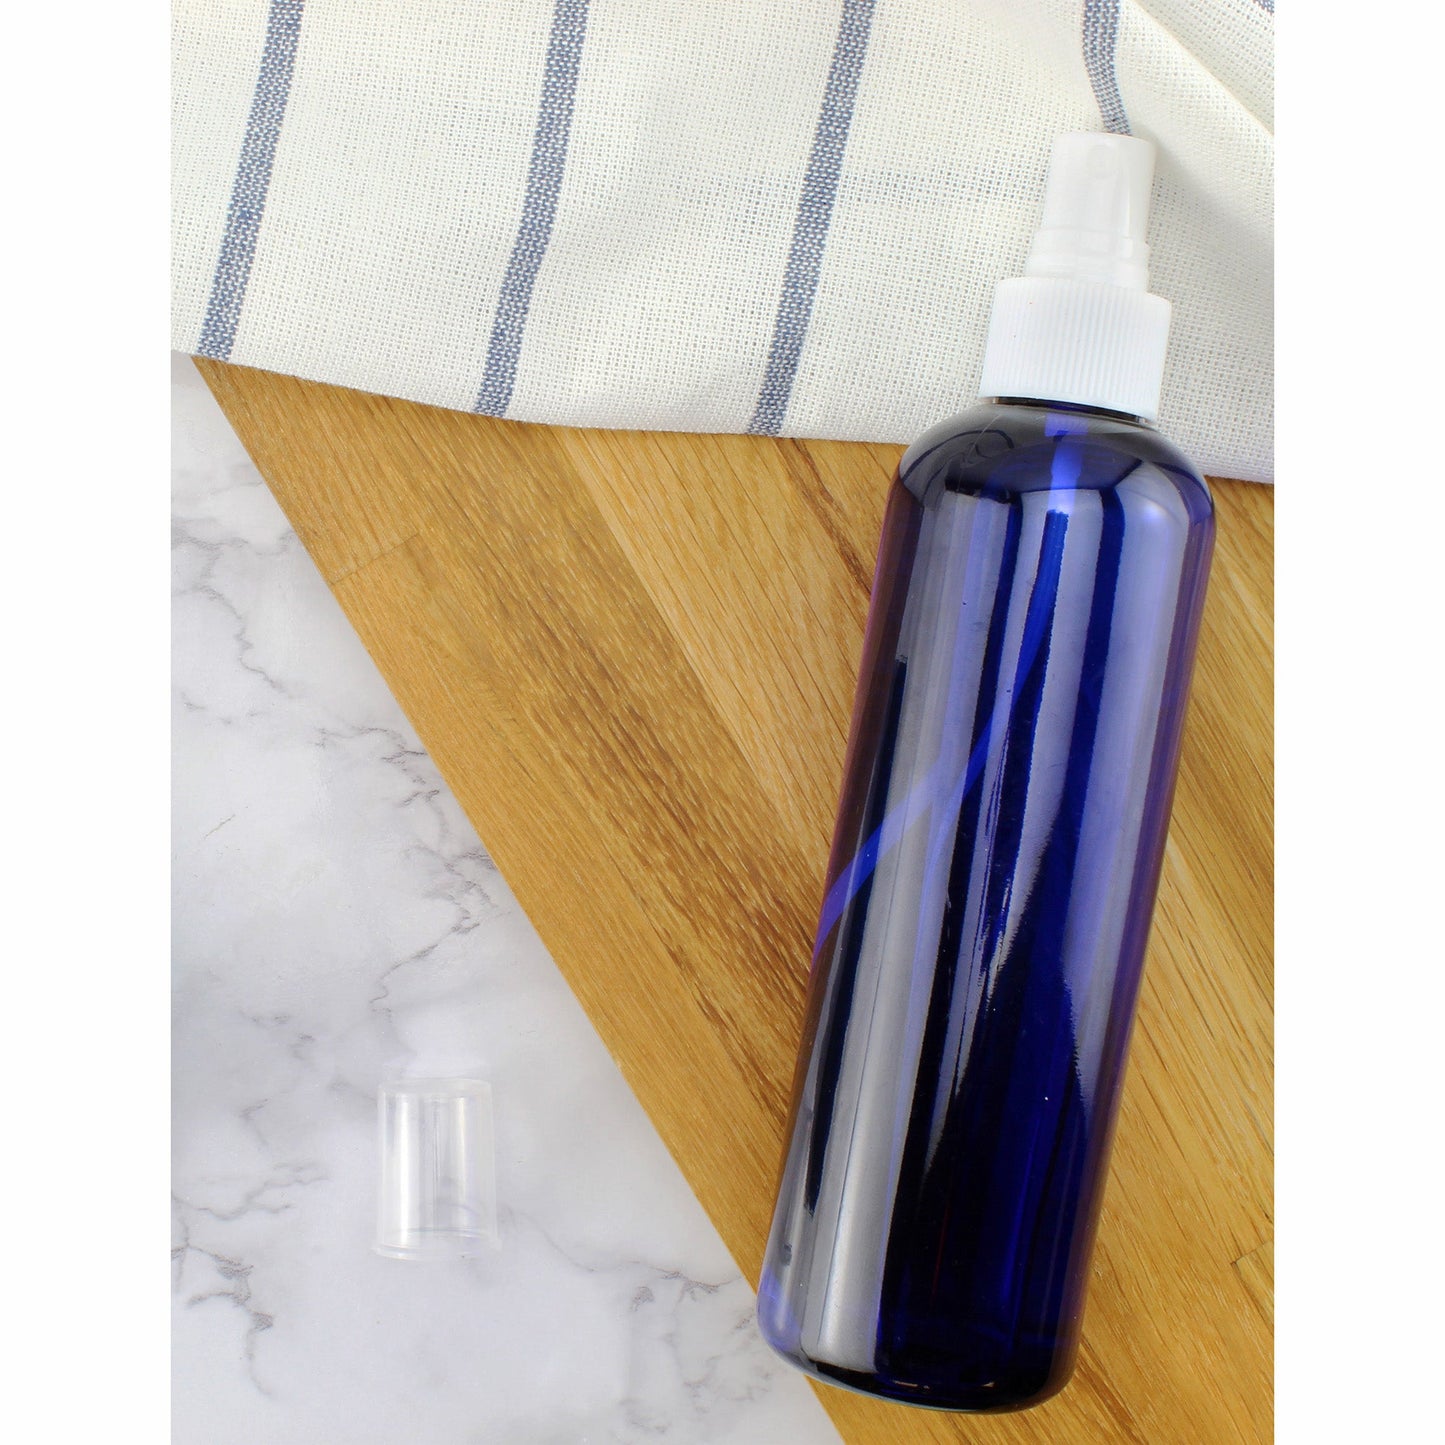 8oz Blue PLASTIC Spray Bottles with White Fine Mist Atomizers (6-Pack) - sh1805cb0Blue